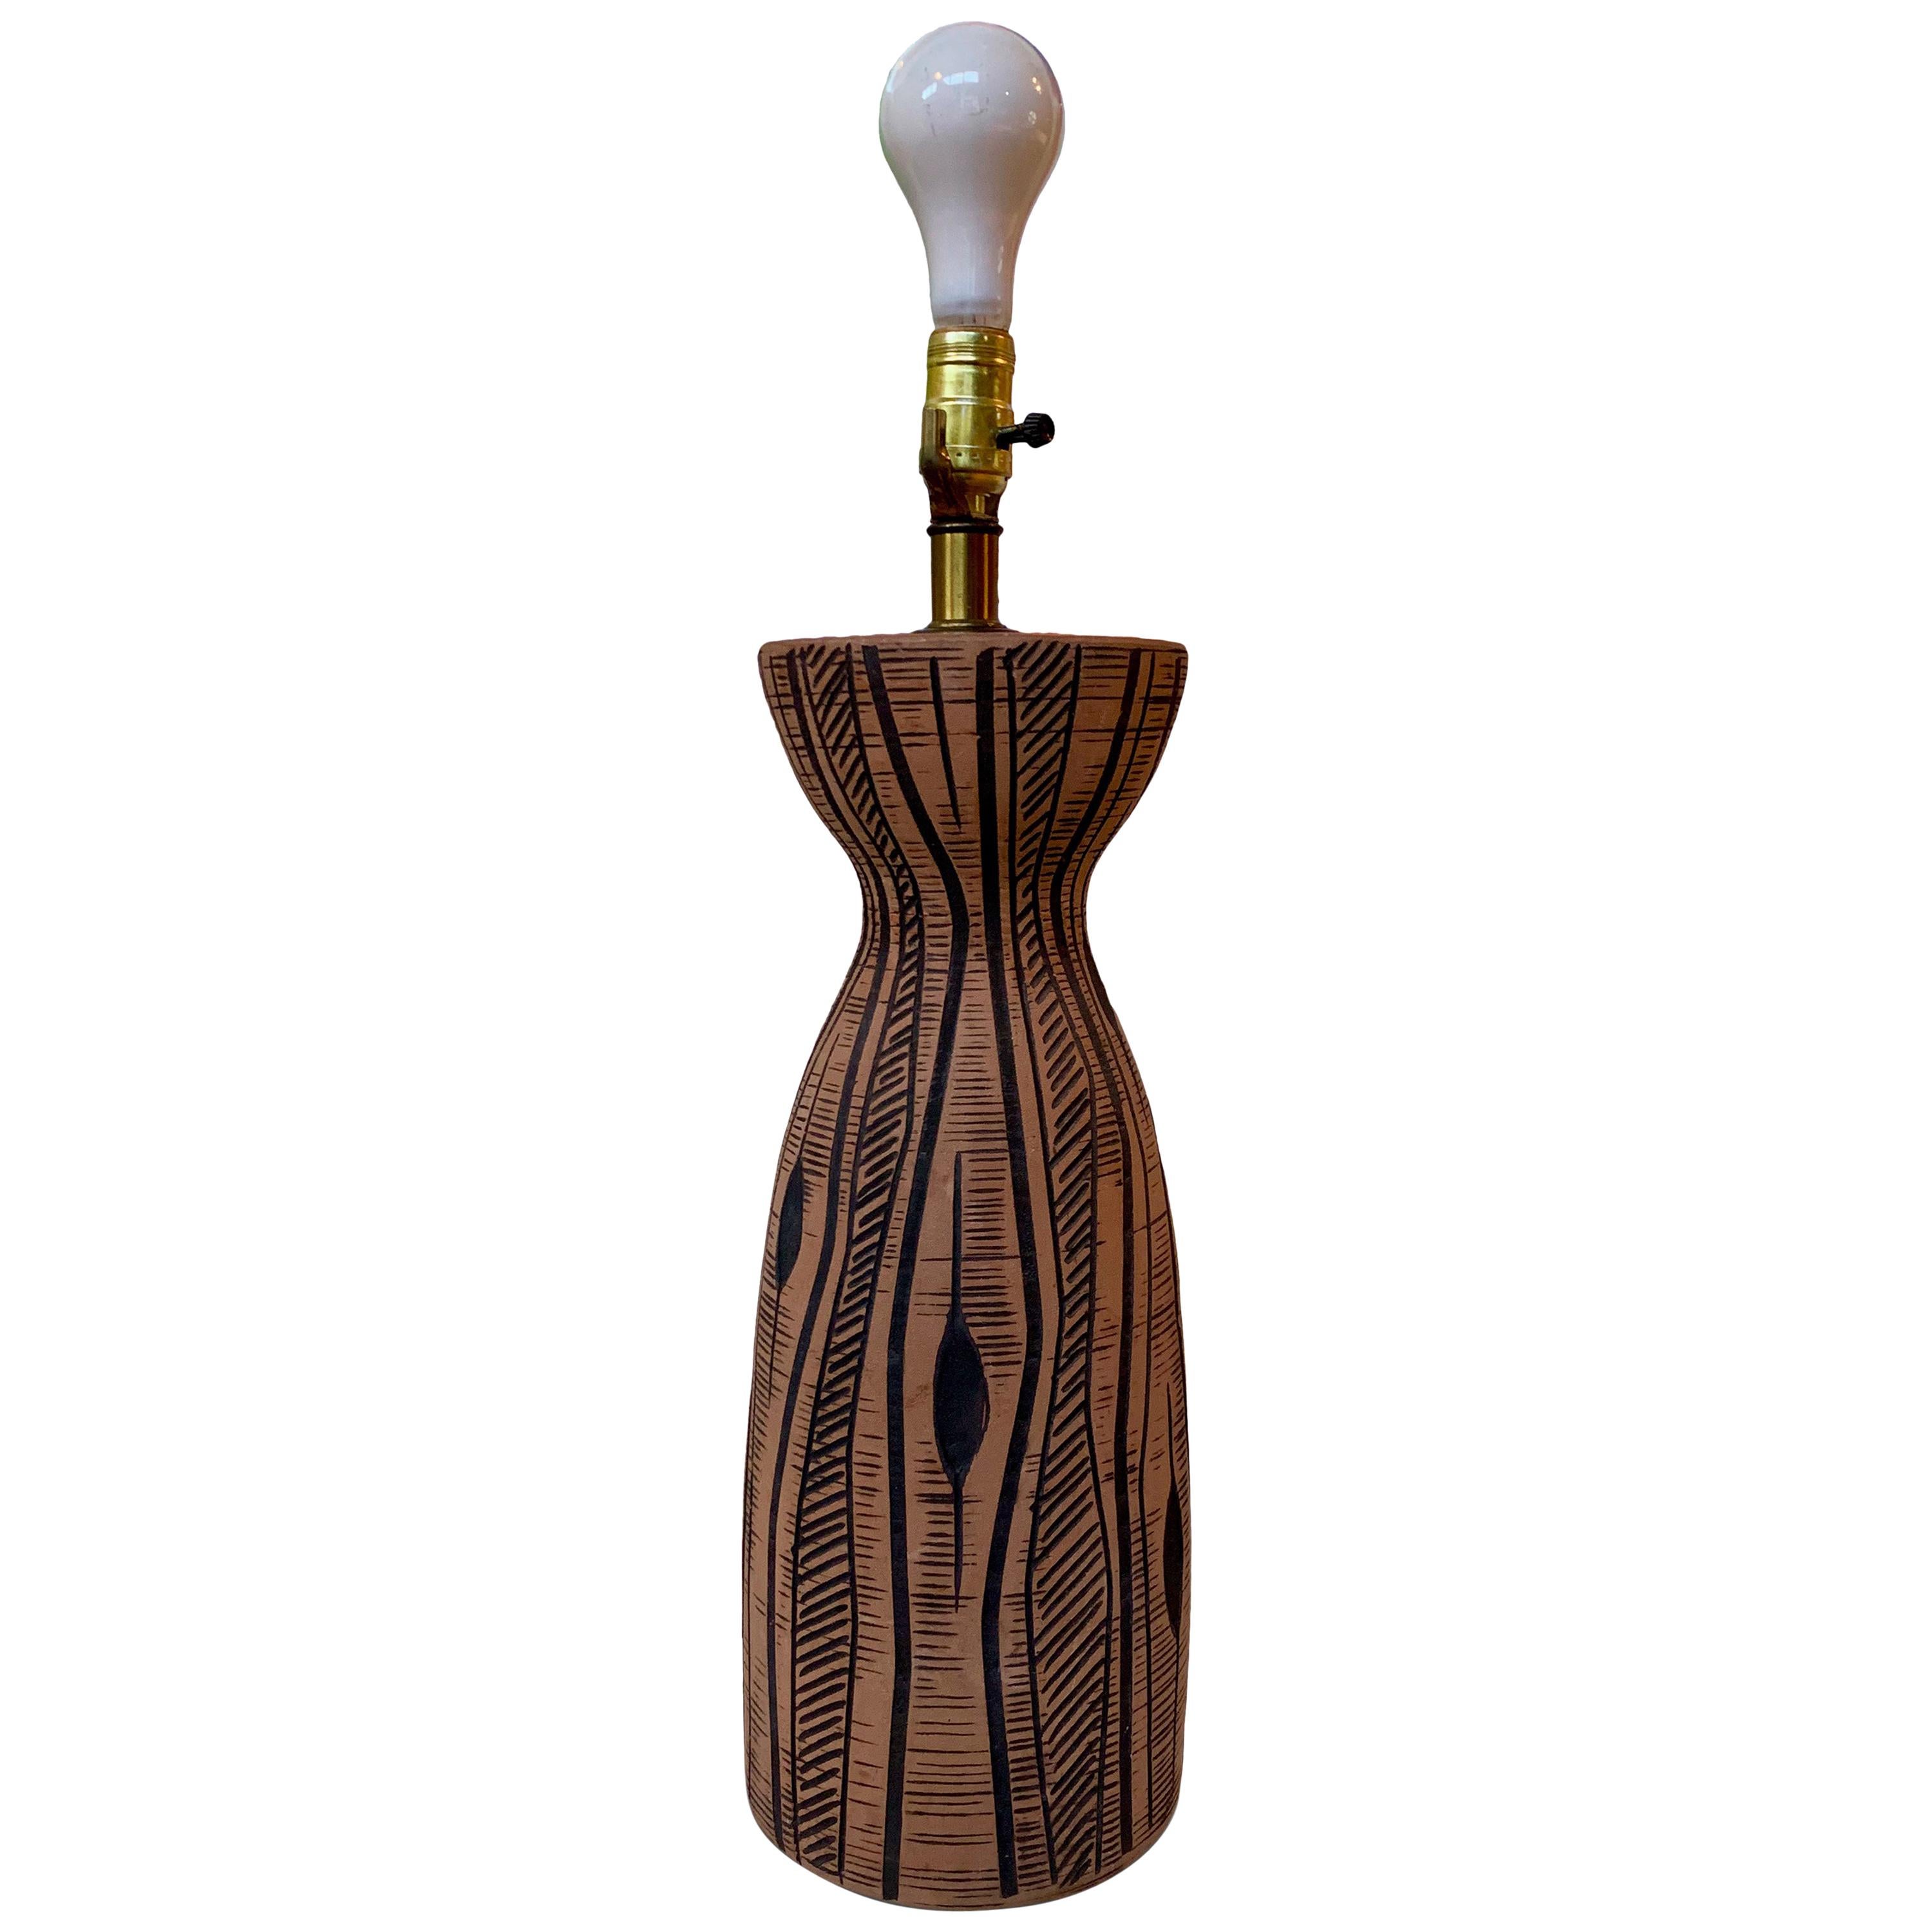 Lee Rosen for Design-Technics Terracotta Colored Lamp with Incised Black Design For Sale